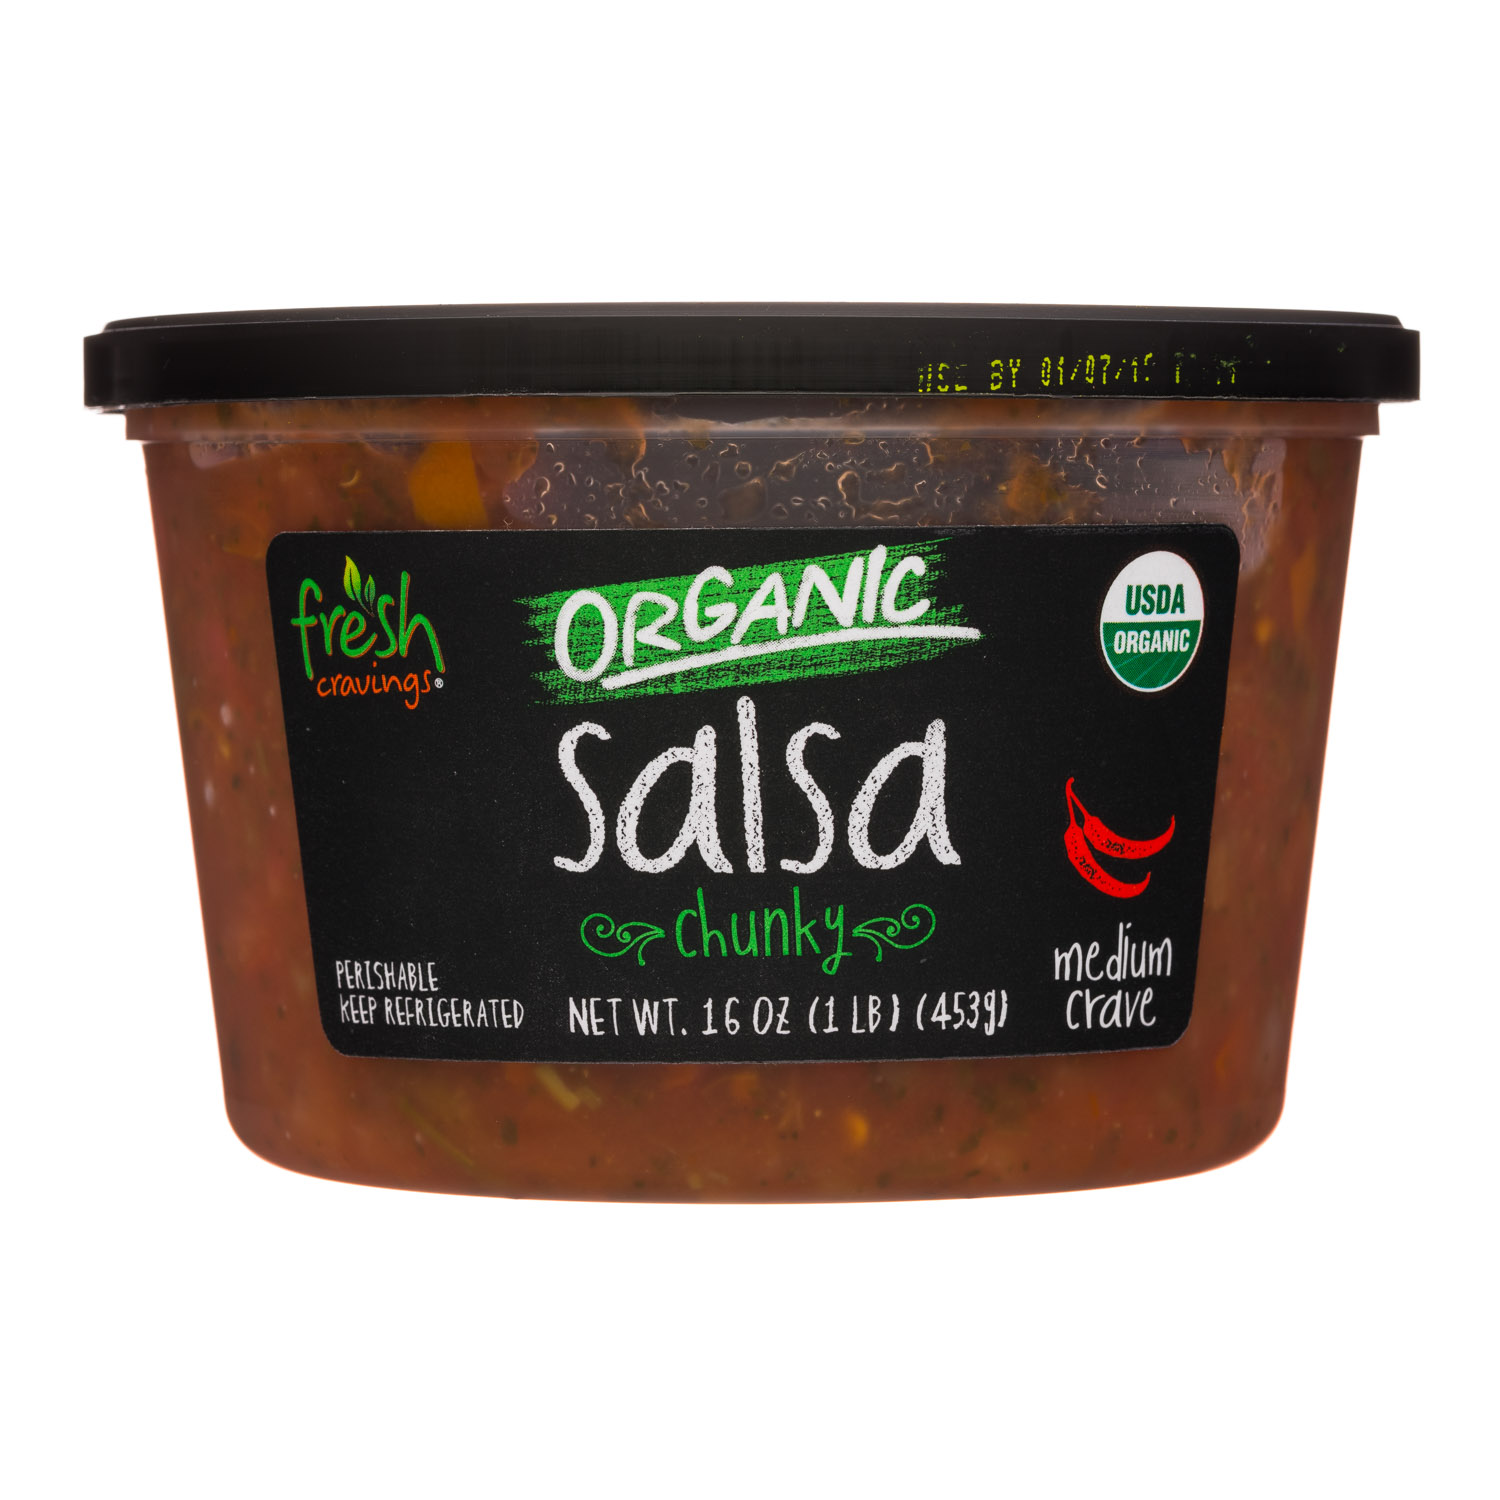 Chunky Organic Salsa - Medium Crave